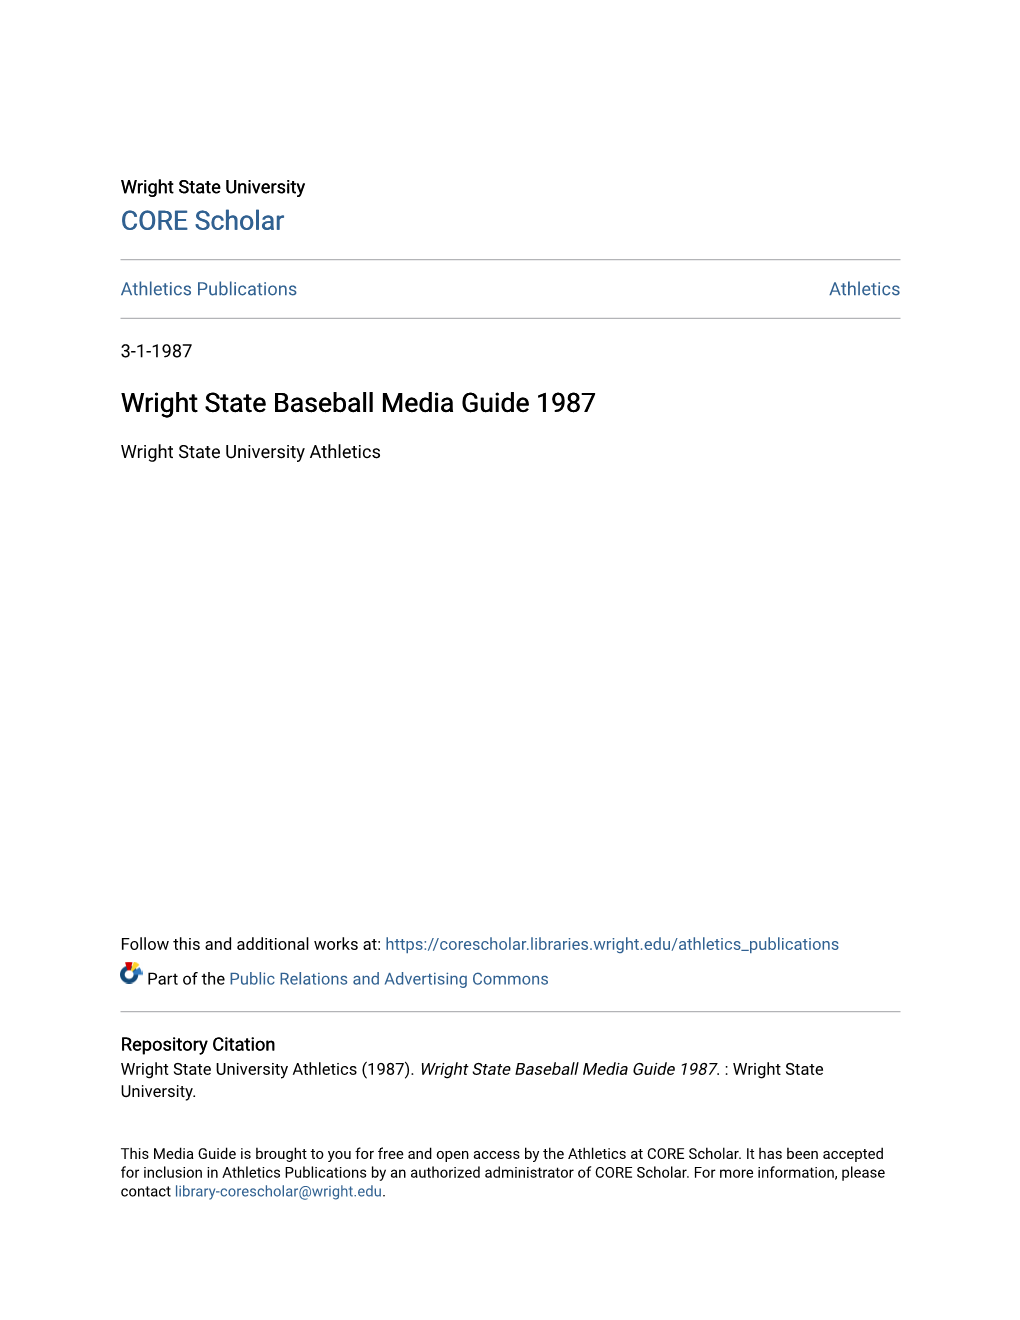 Wright State Baseball Media Guide 1987